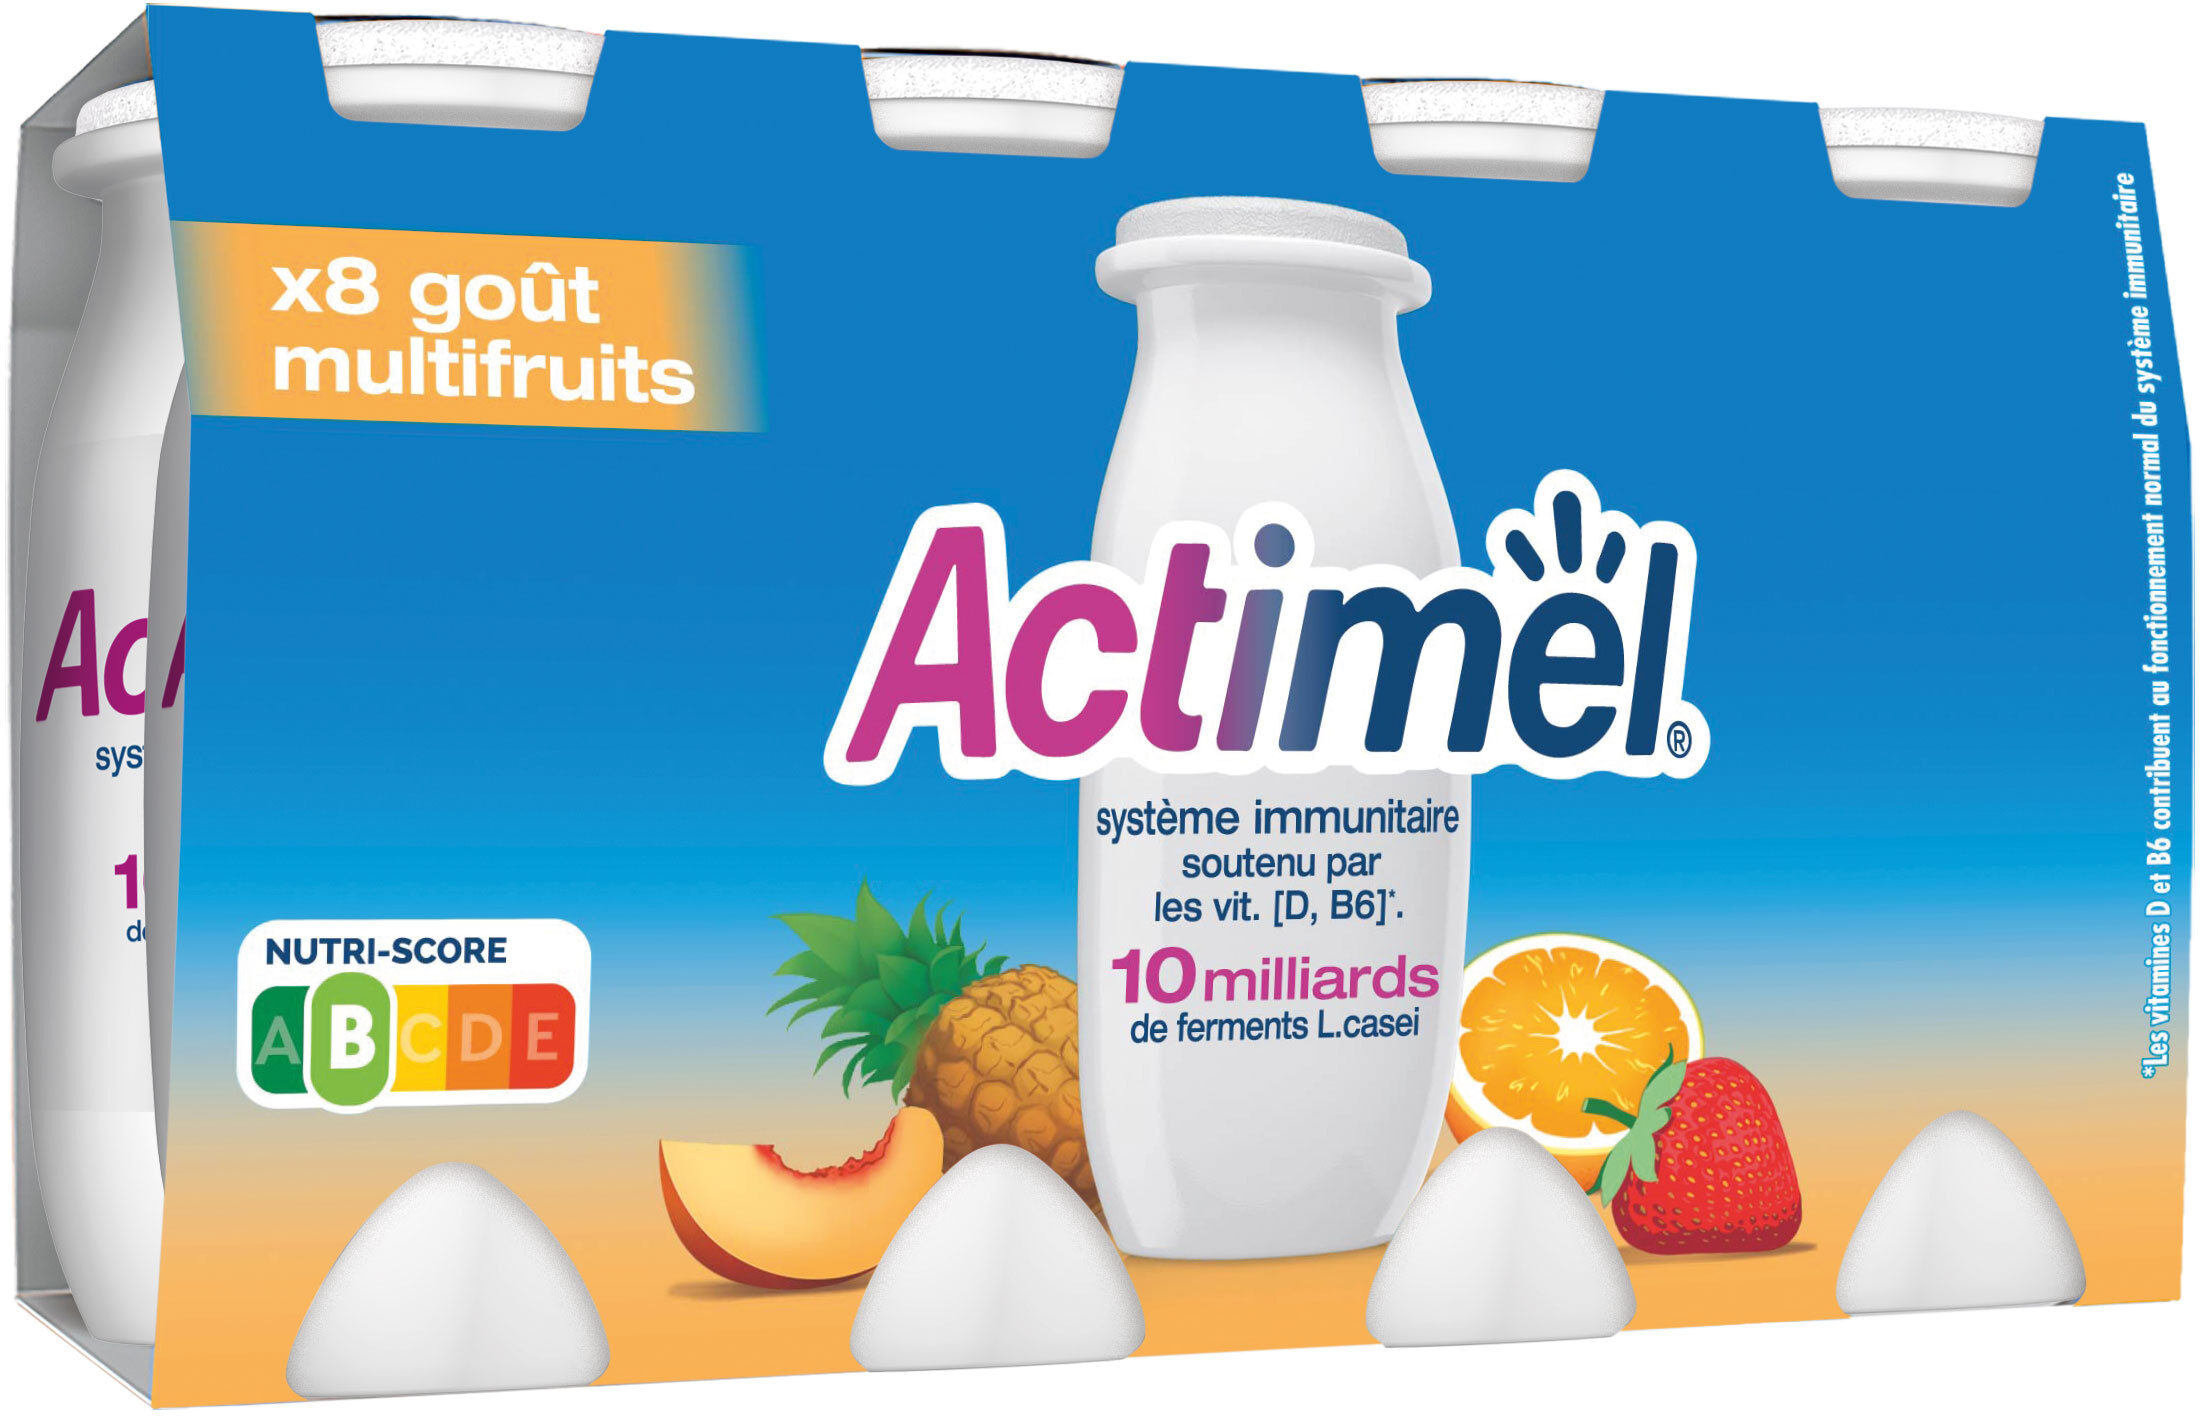 Actimel gout multifruit 100 g x 8 - Produkt - fr